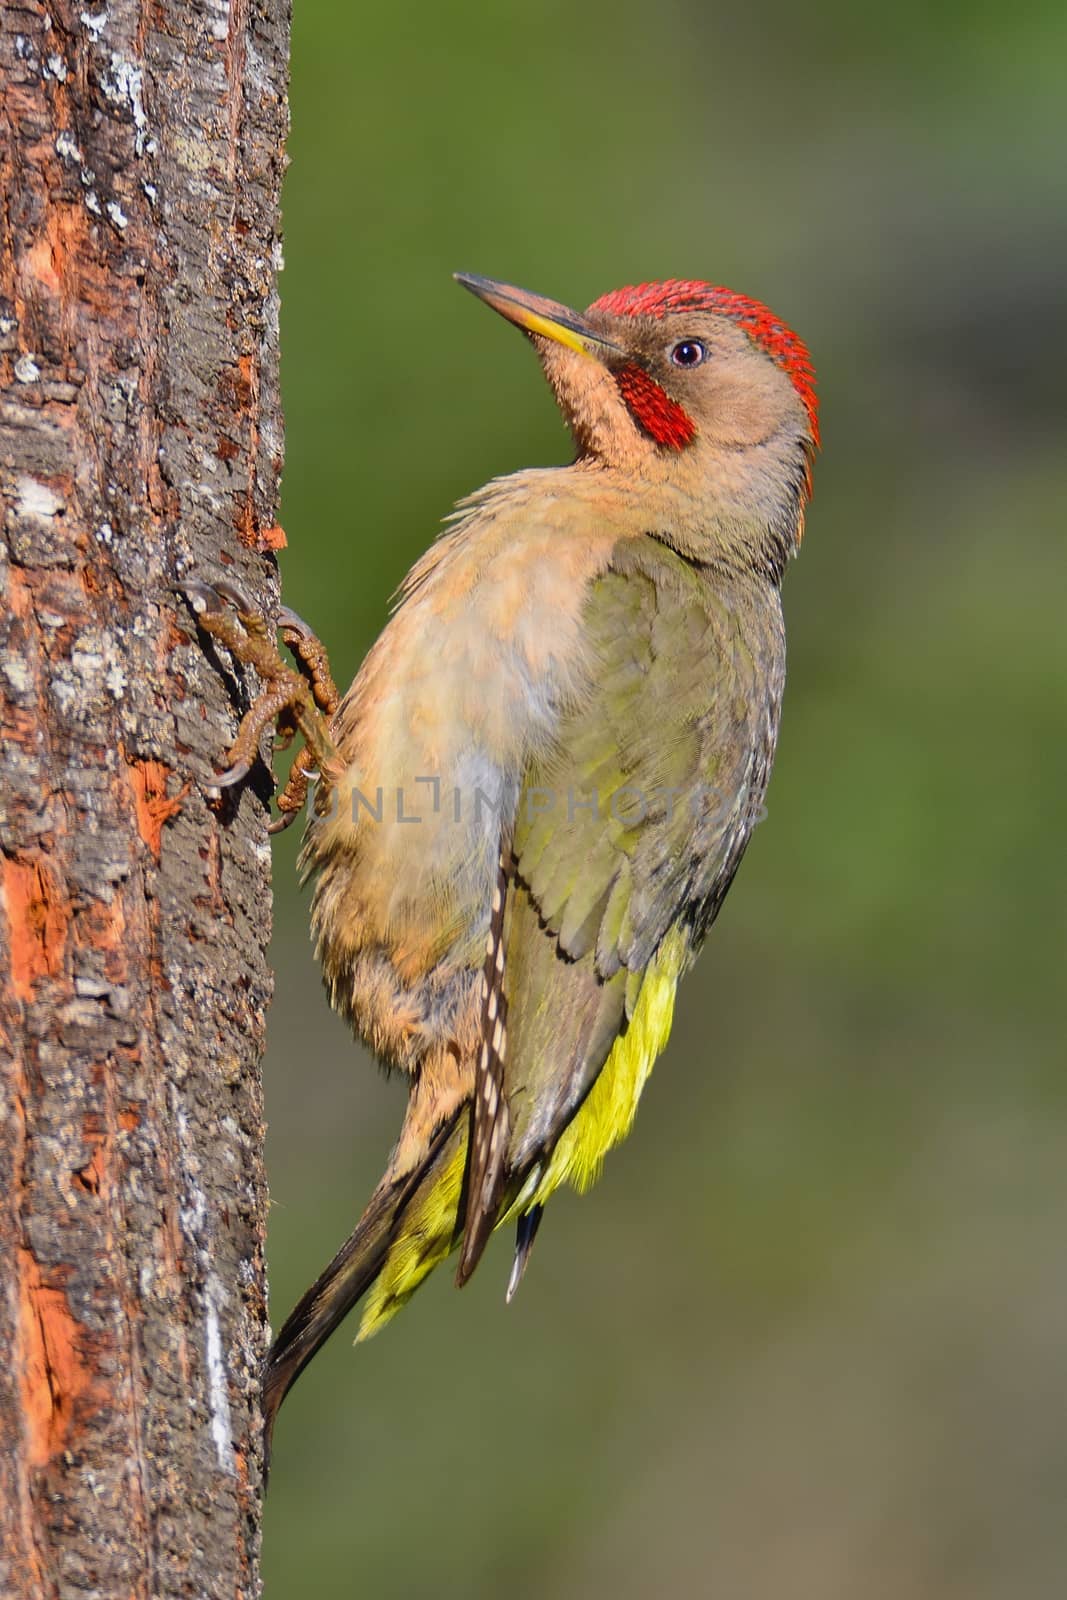 Male european green woodpecker perched on a branch.